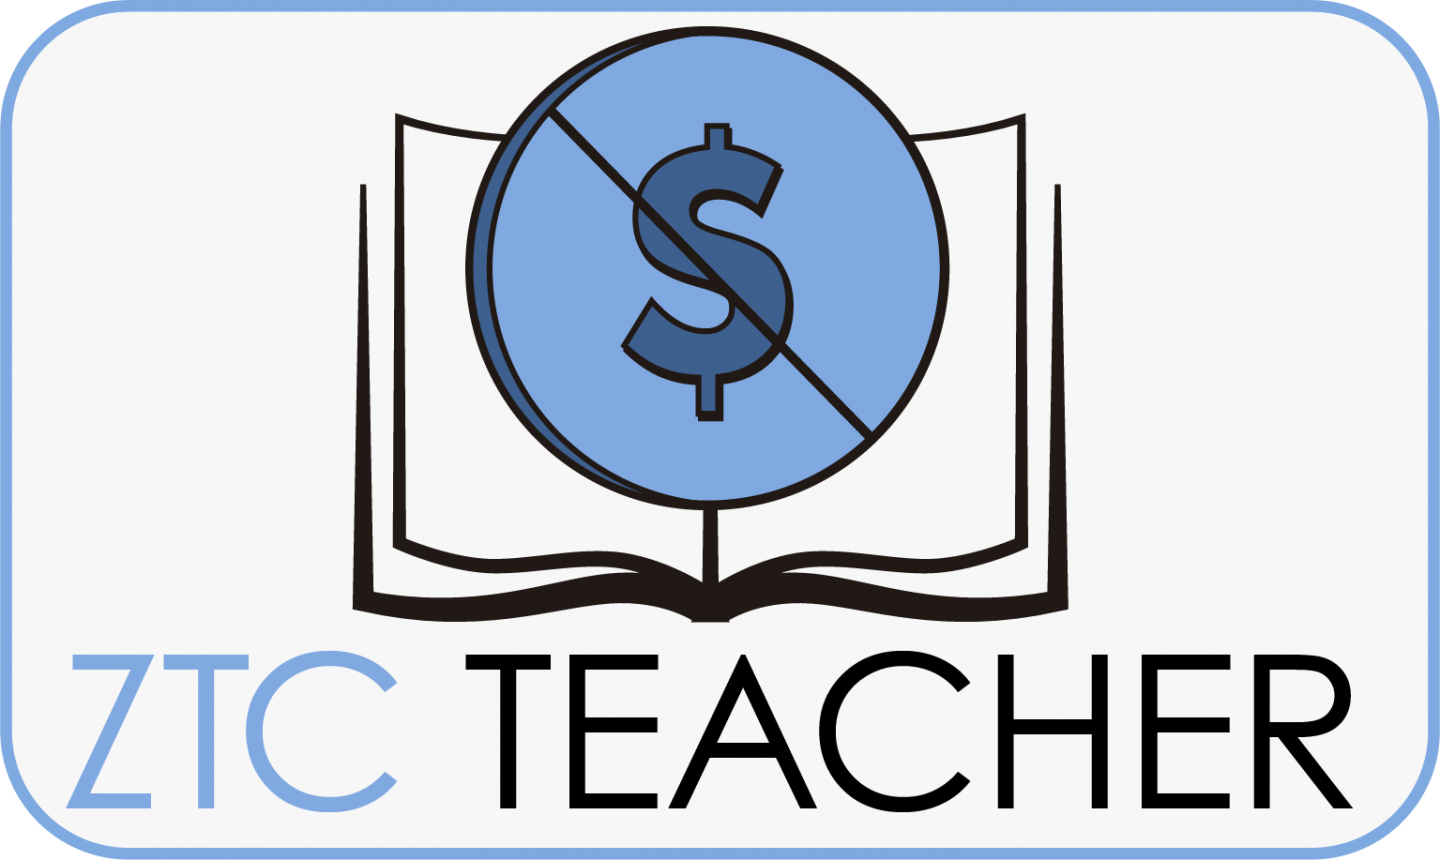 Bluecoin over white book with ZTC TEACHER underneath